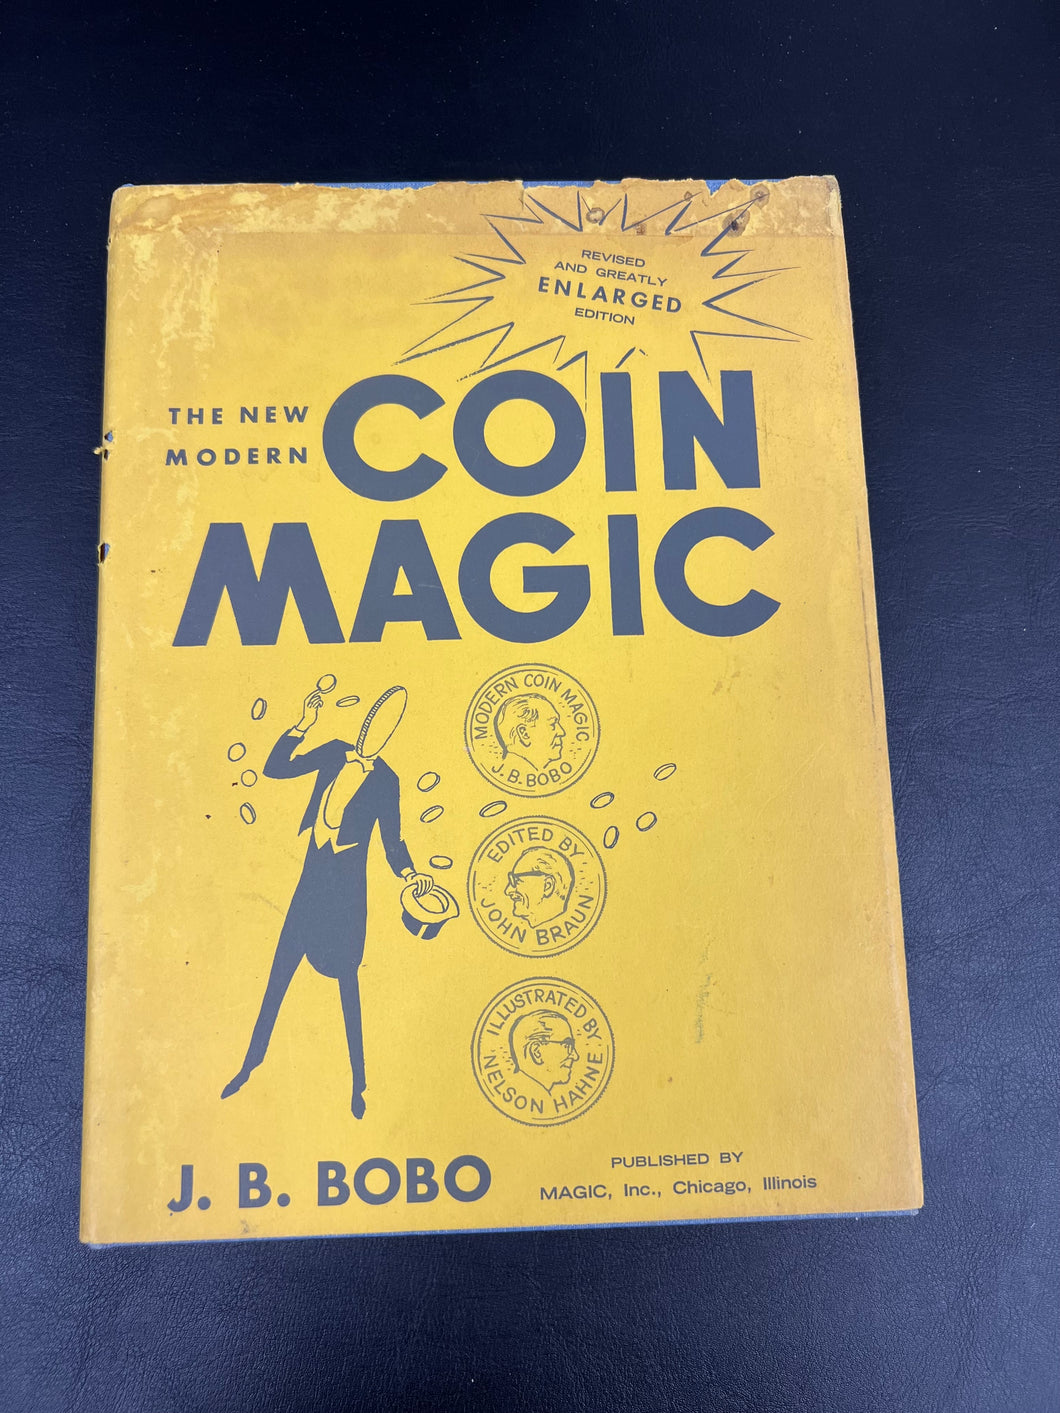 The New Modern Coin Magic by J.B. BOBO